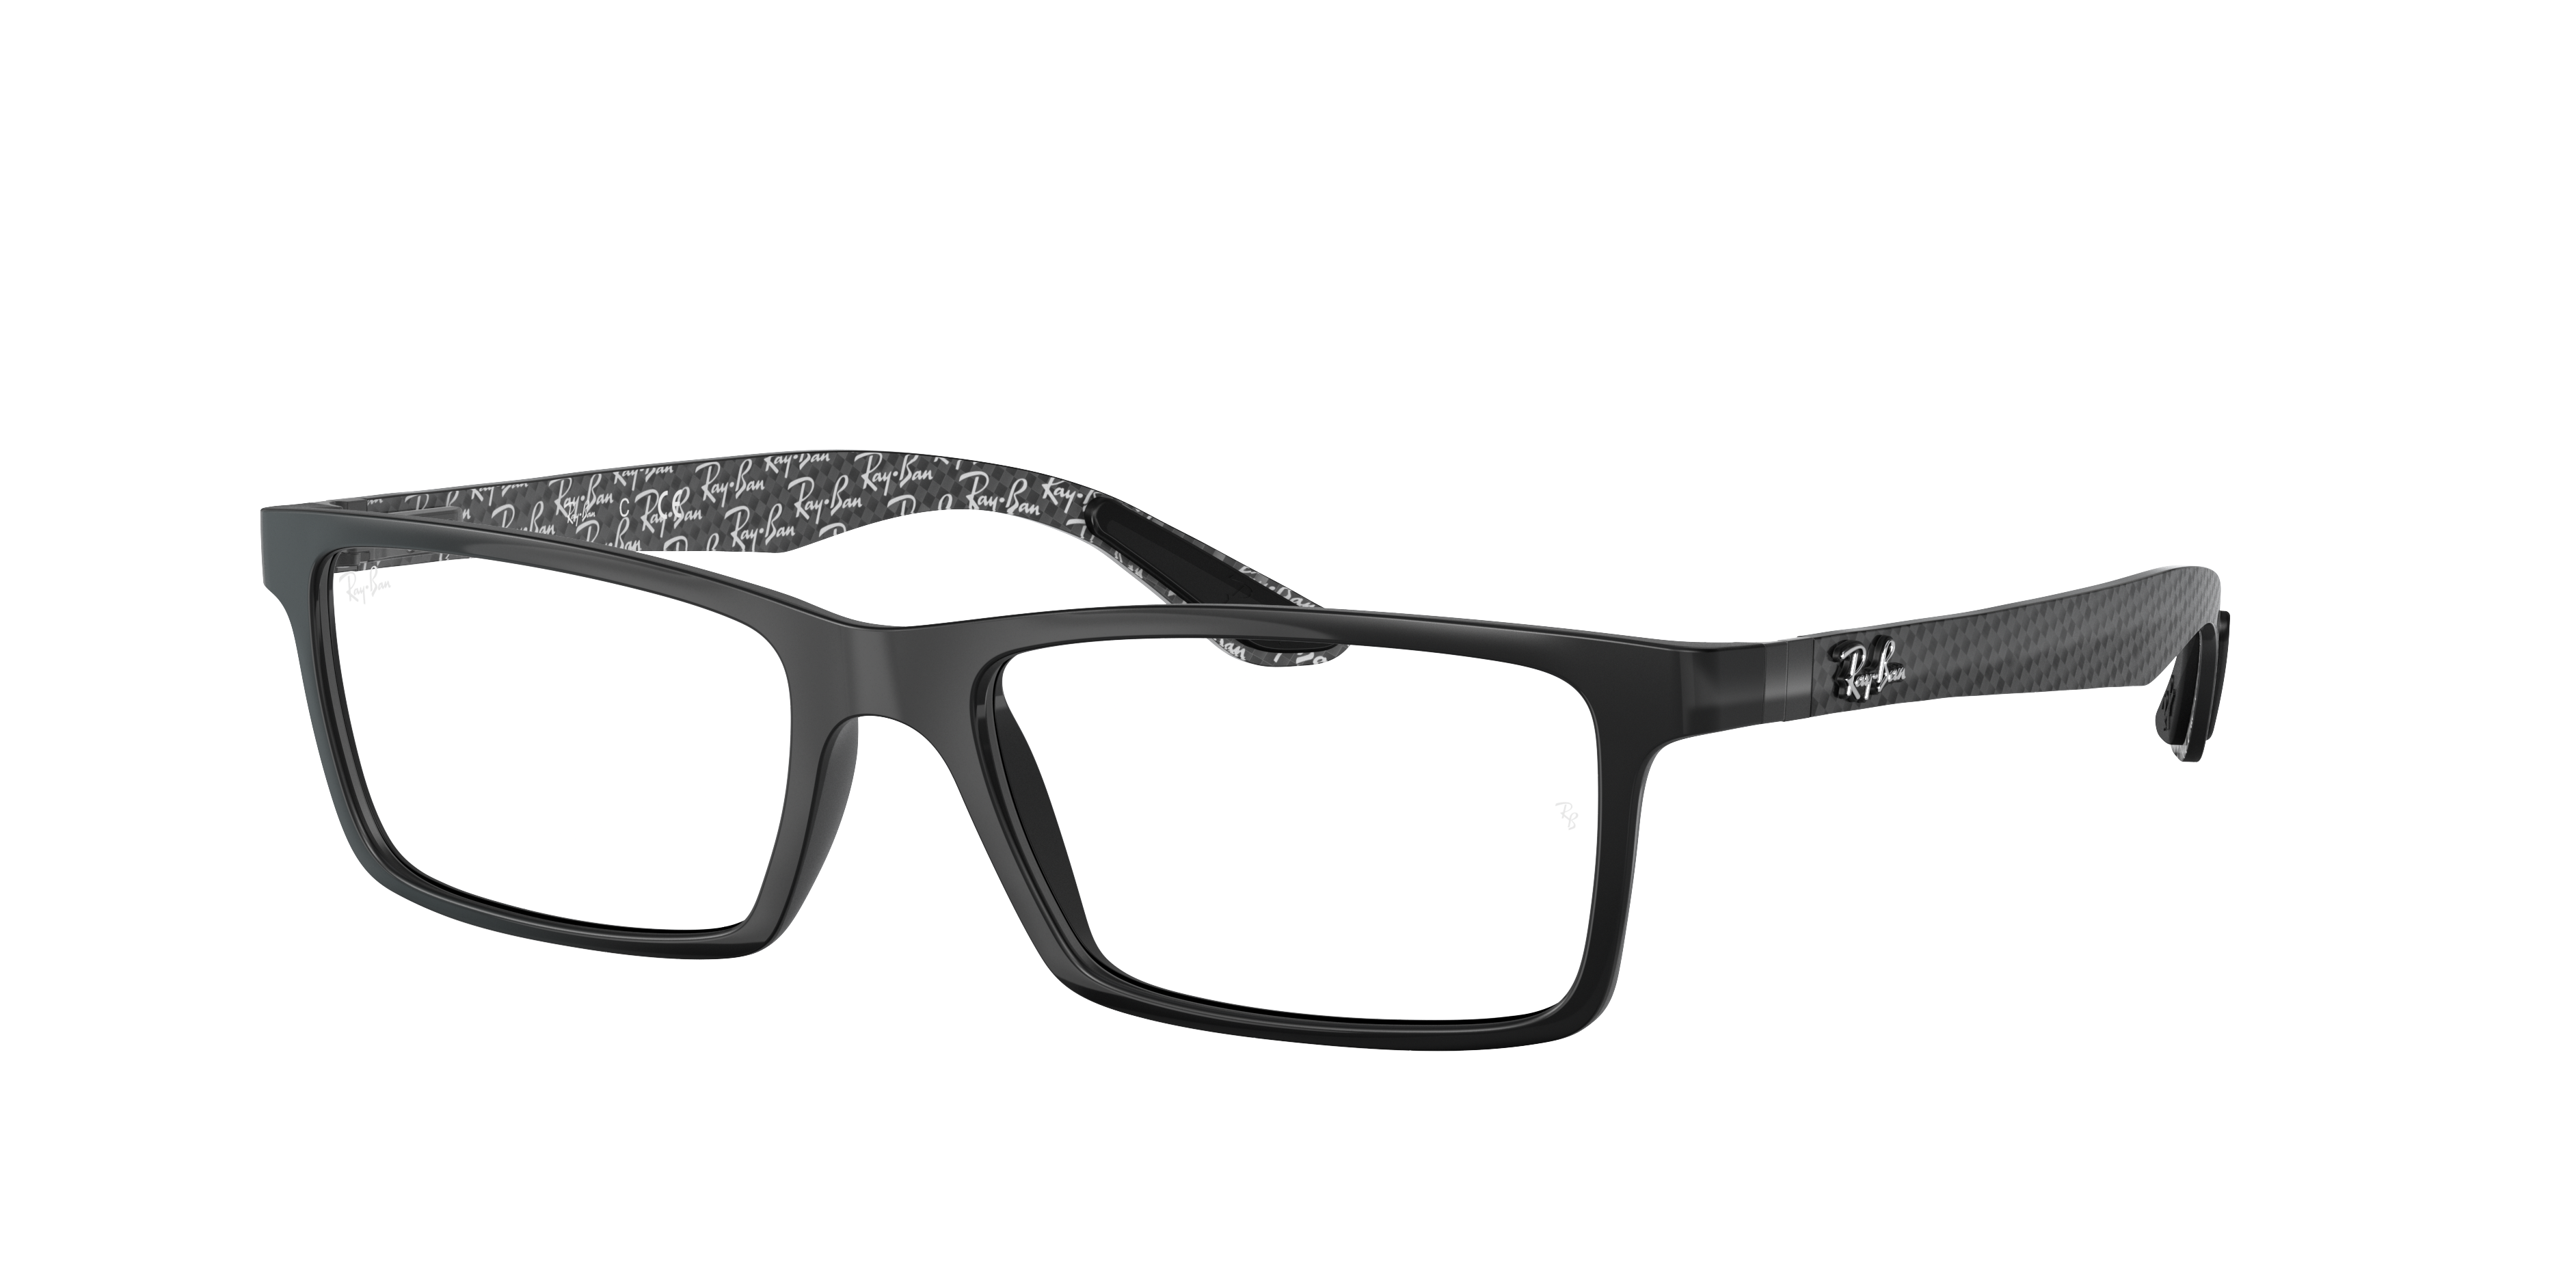 Rb8901 Optics Eyeglasses with Black Frame | Ray-Ban®